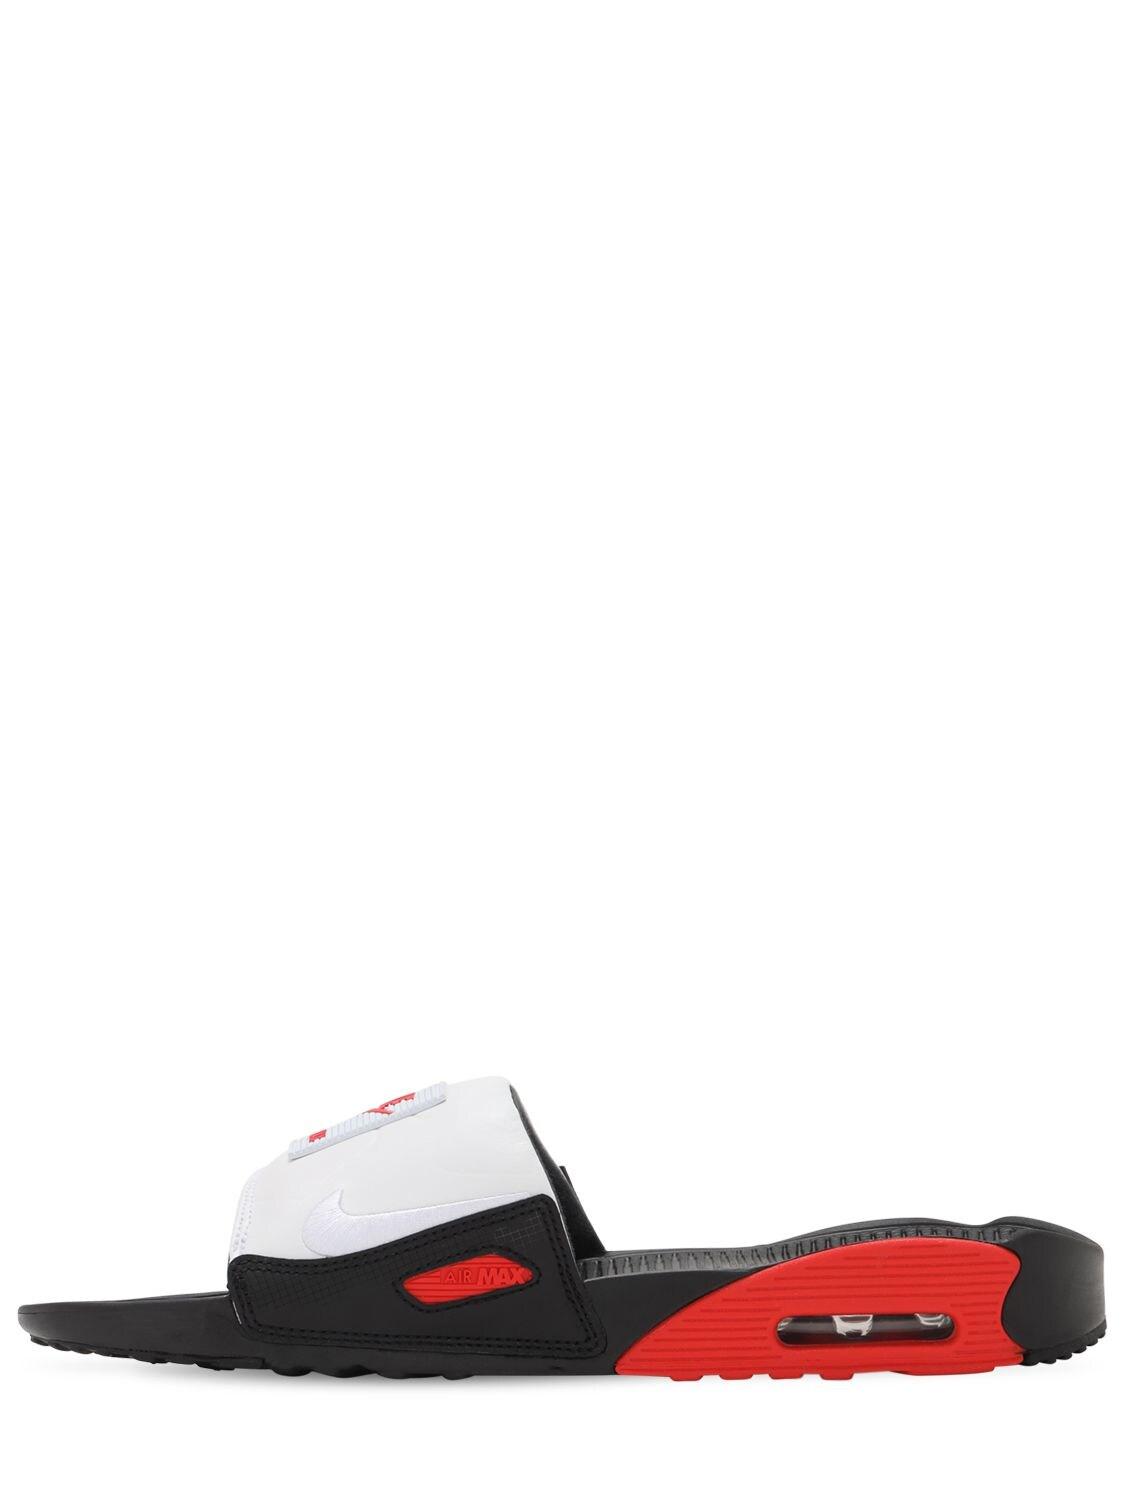 Nike Air Max 90 Slide for Men - Lyst